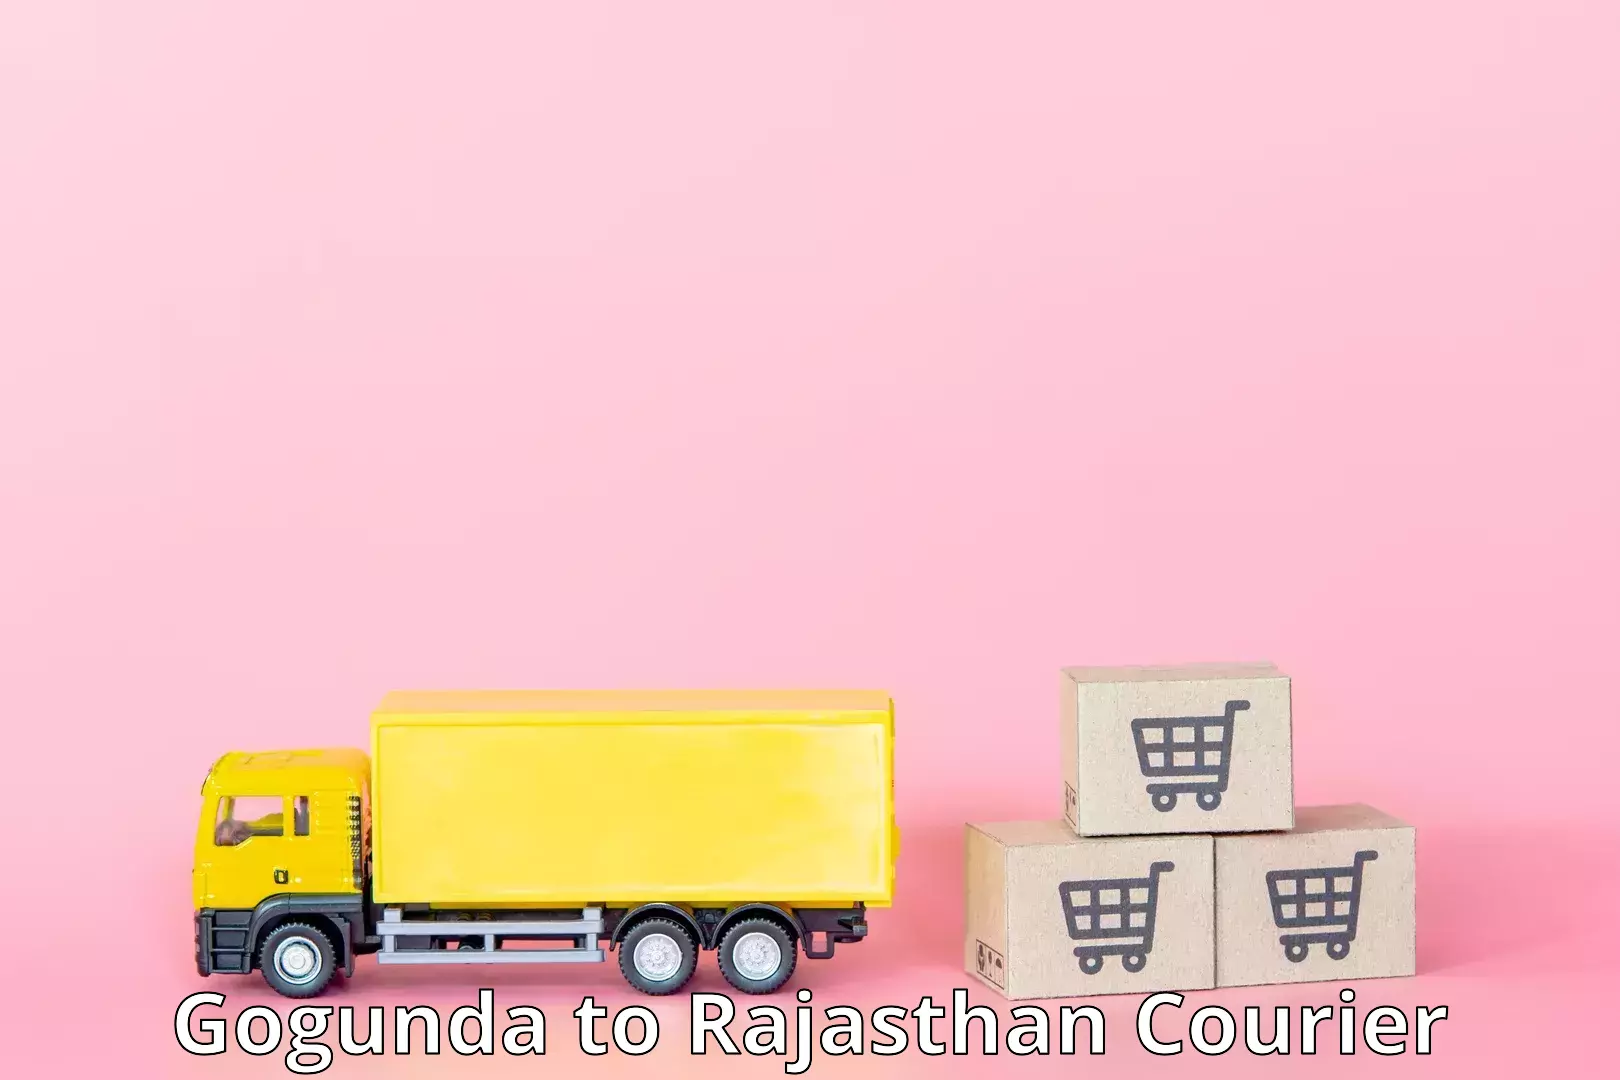 High-capacity parcel service Gogunda to Pokhran